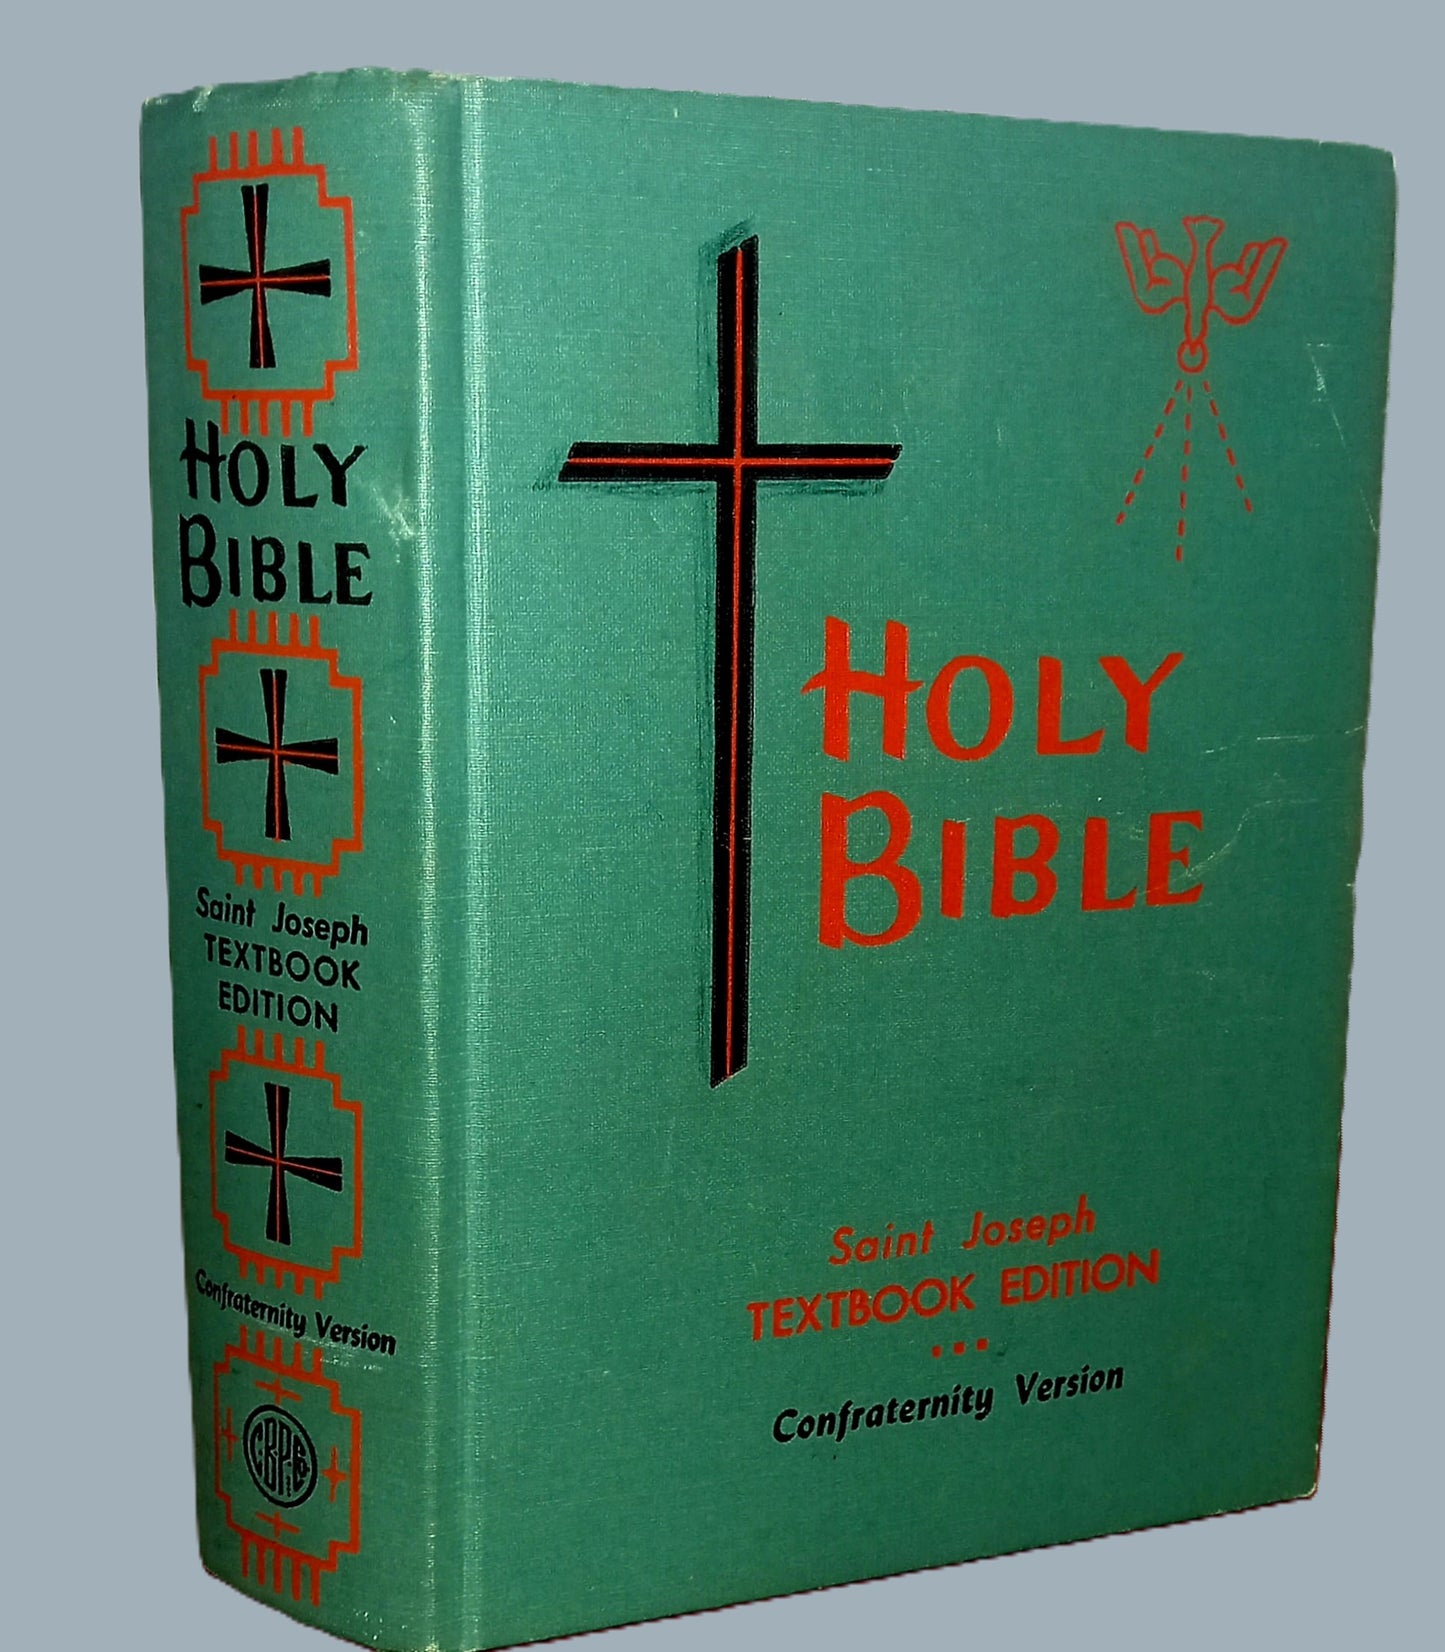 Saint Joseph Edition of the HOLY BIBLE